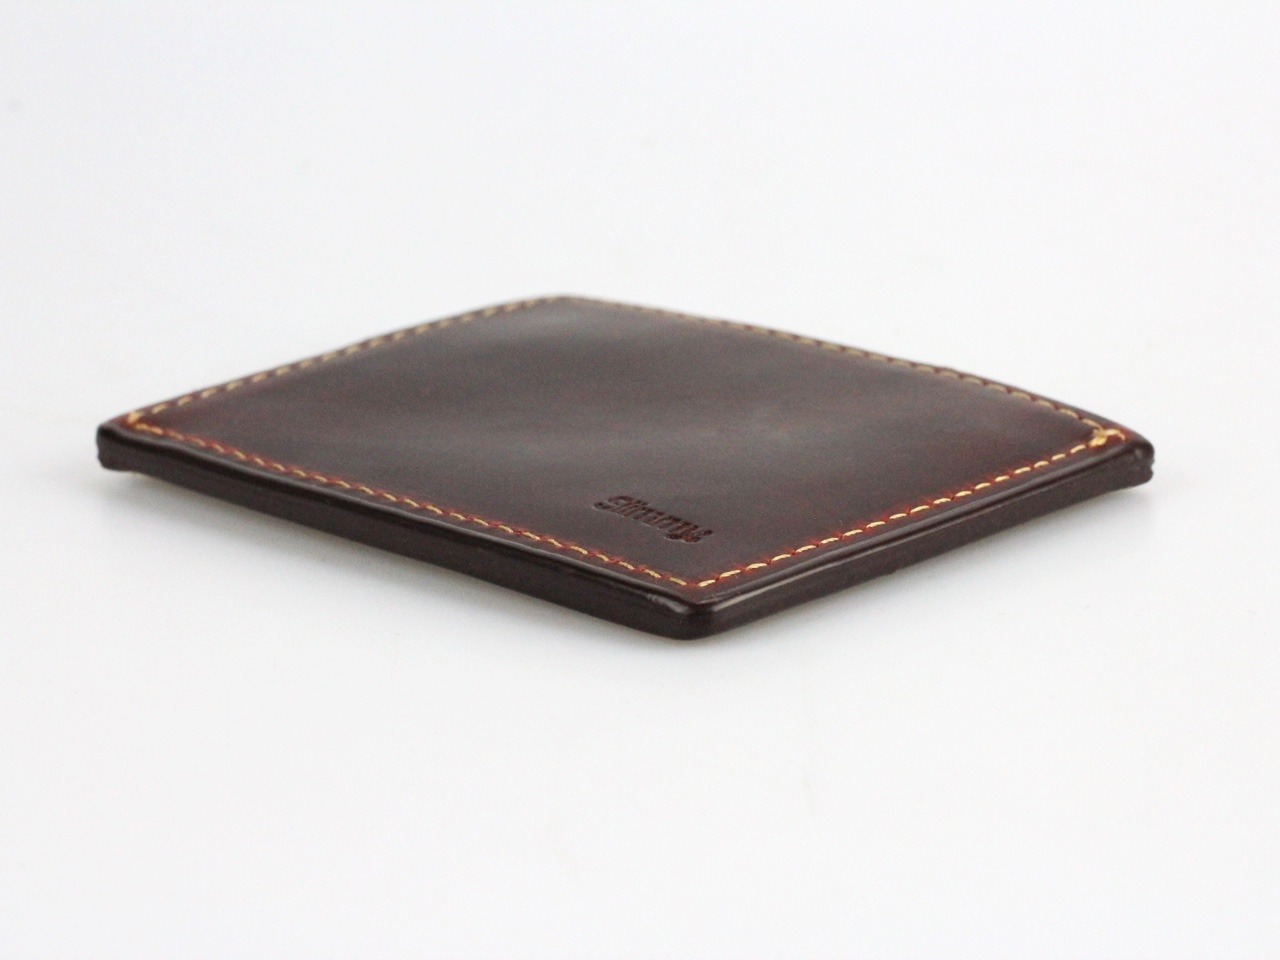 Slimmy Wallet: Smart Slim Wallet Design